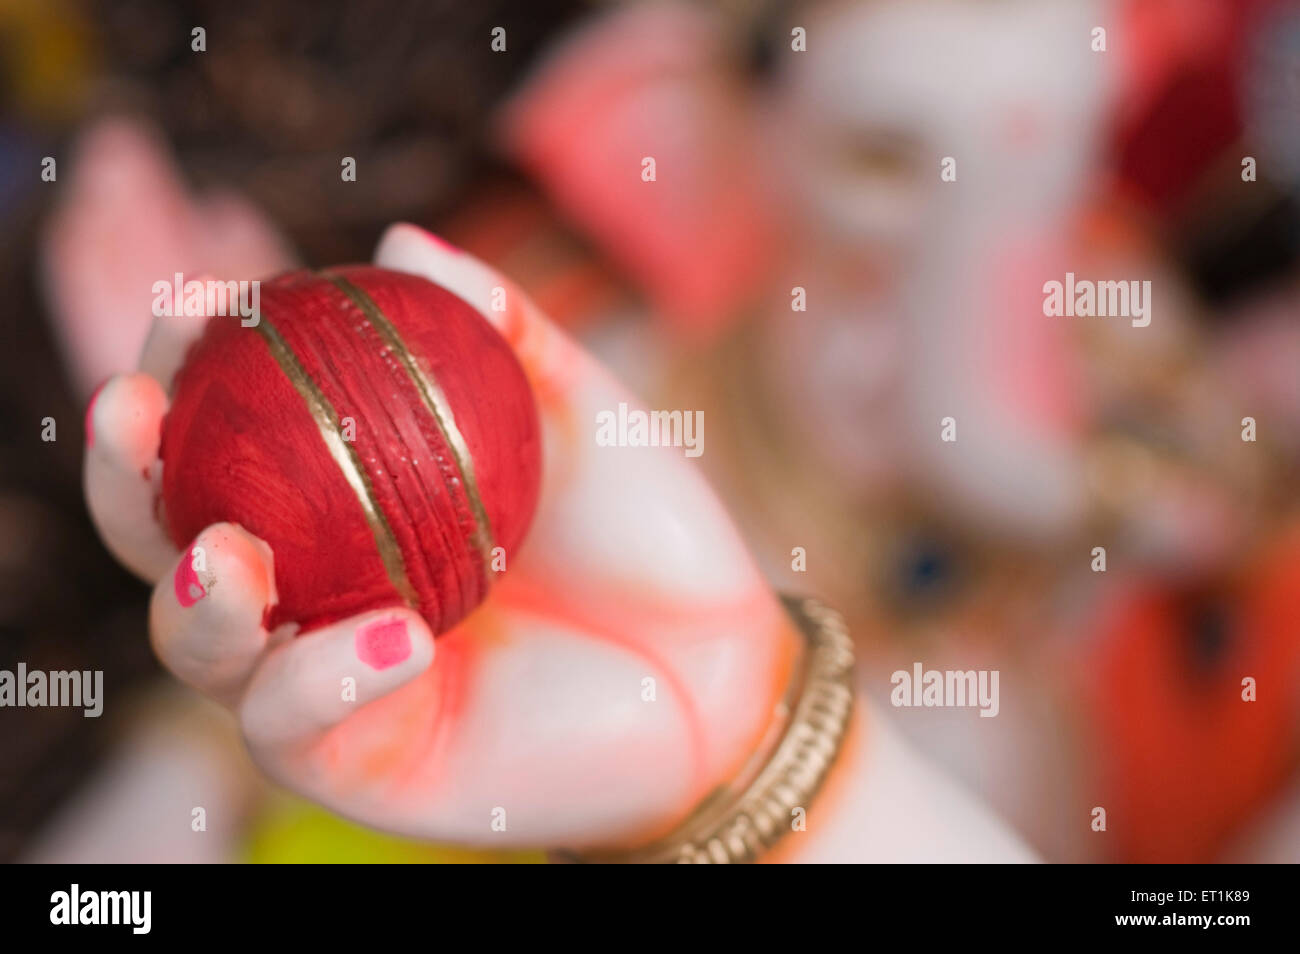 Roten Cricketball in Händen von Lord Ganesh Pune Maharashtra Indien Asien Sept 2011 Stockfoto